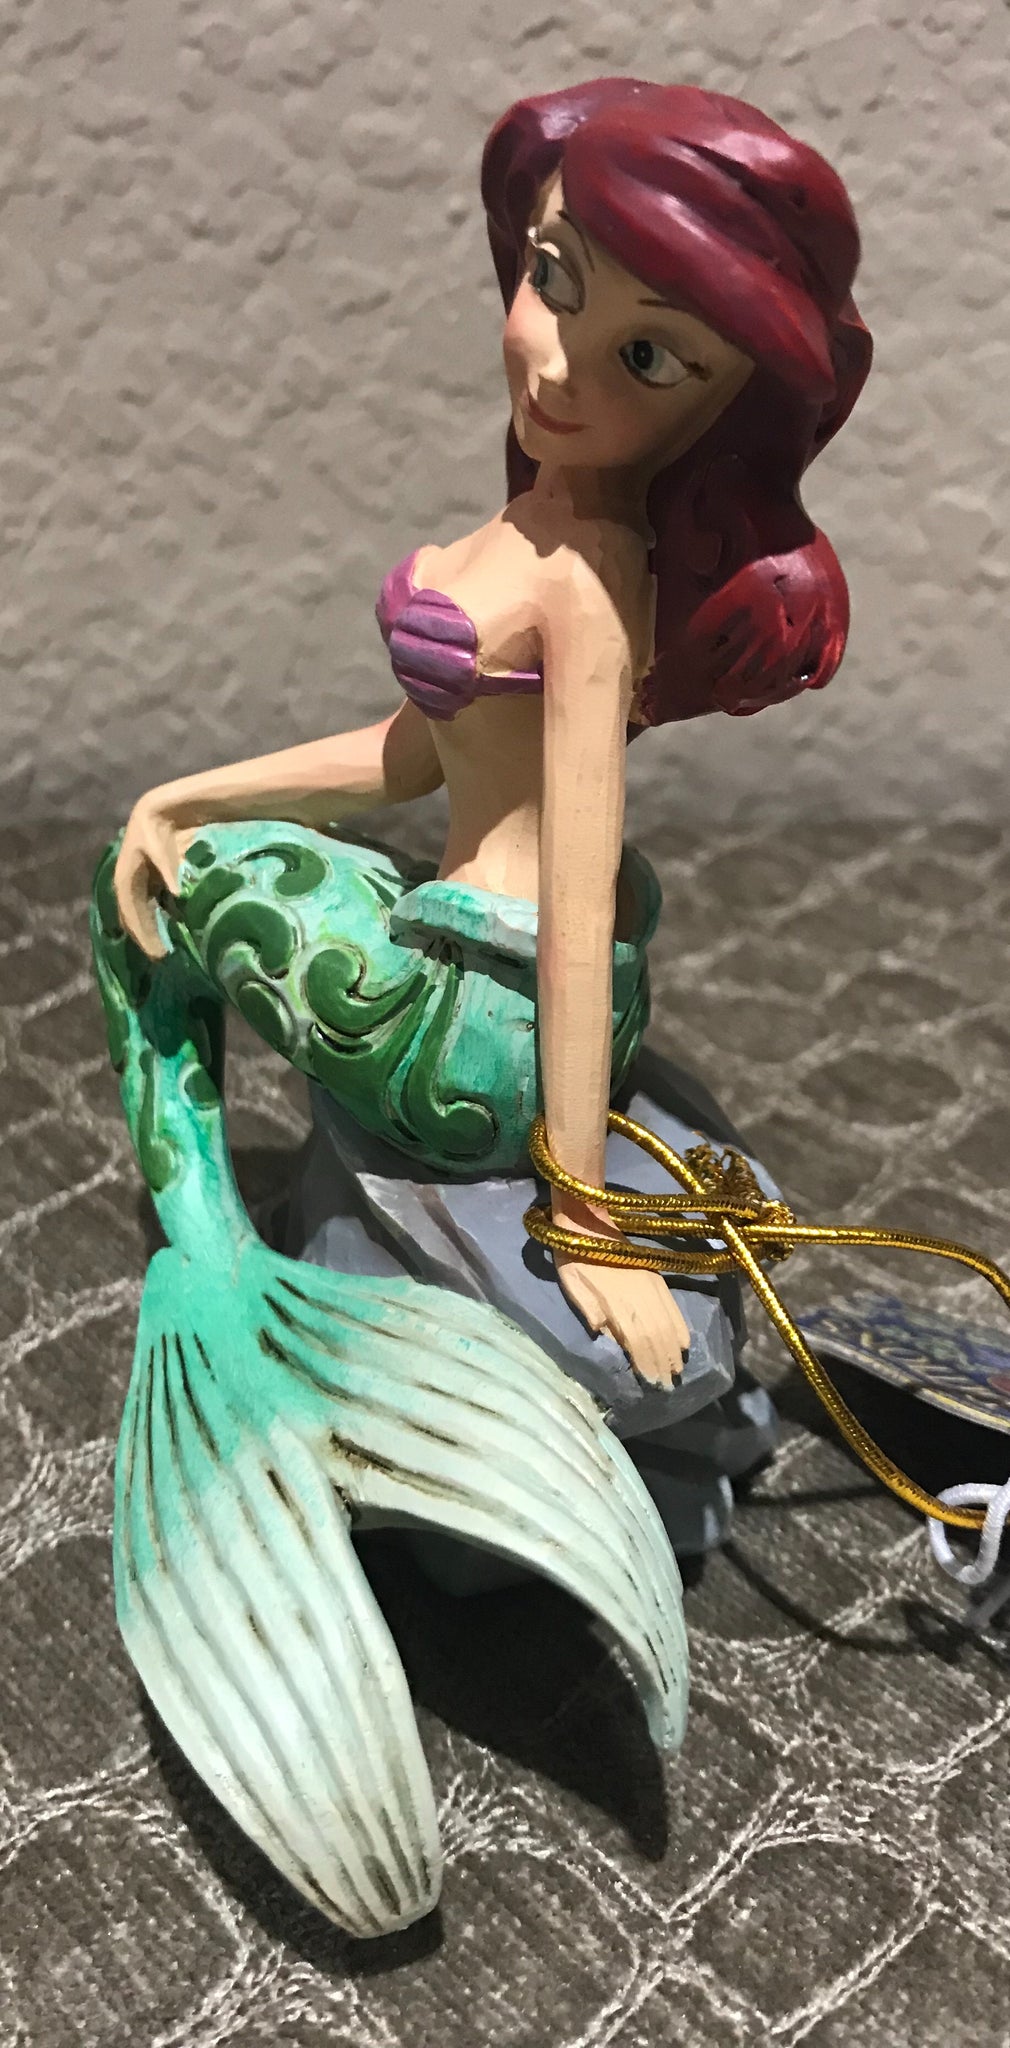 Jim Shore Disney Traditions Little Mermaid Ariel Splash of Fun Figurine  F4023530